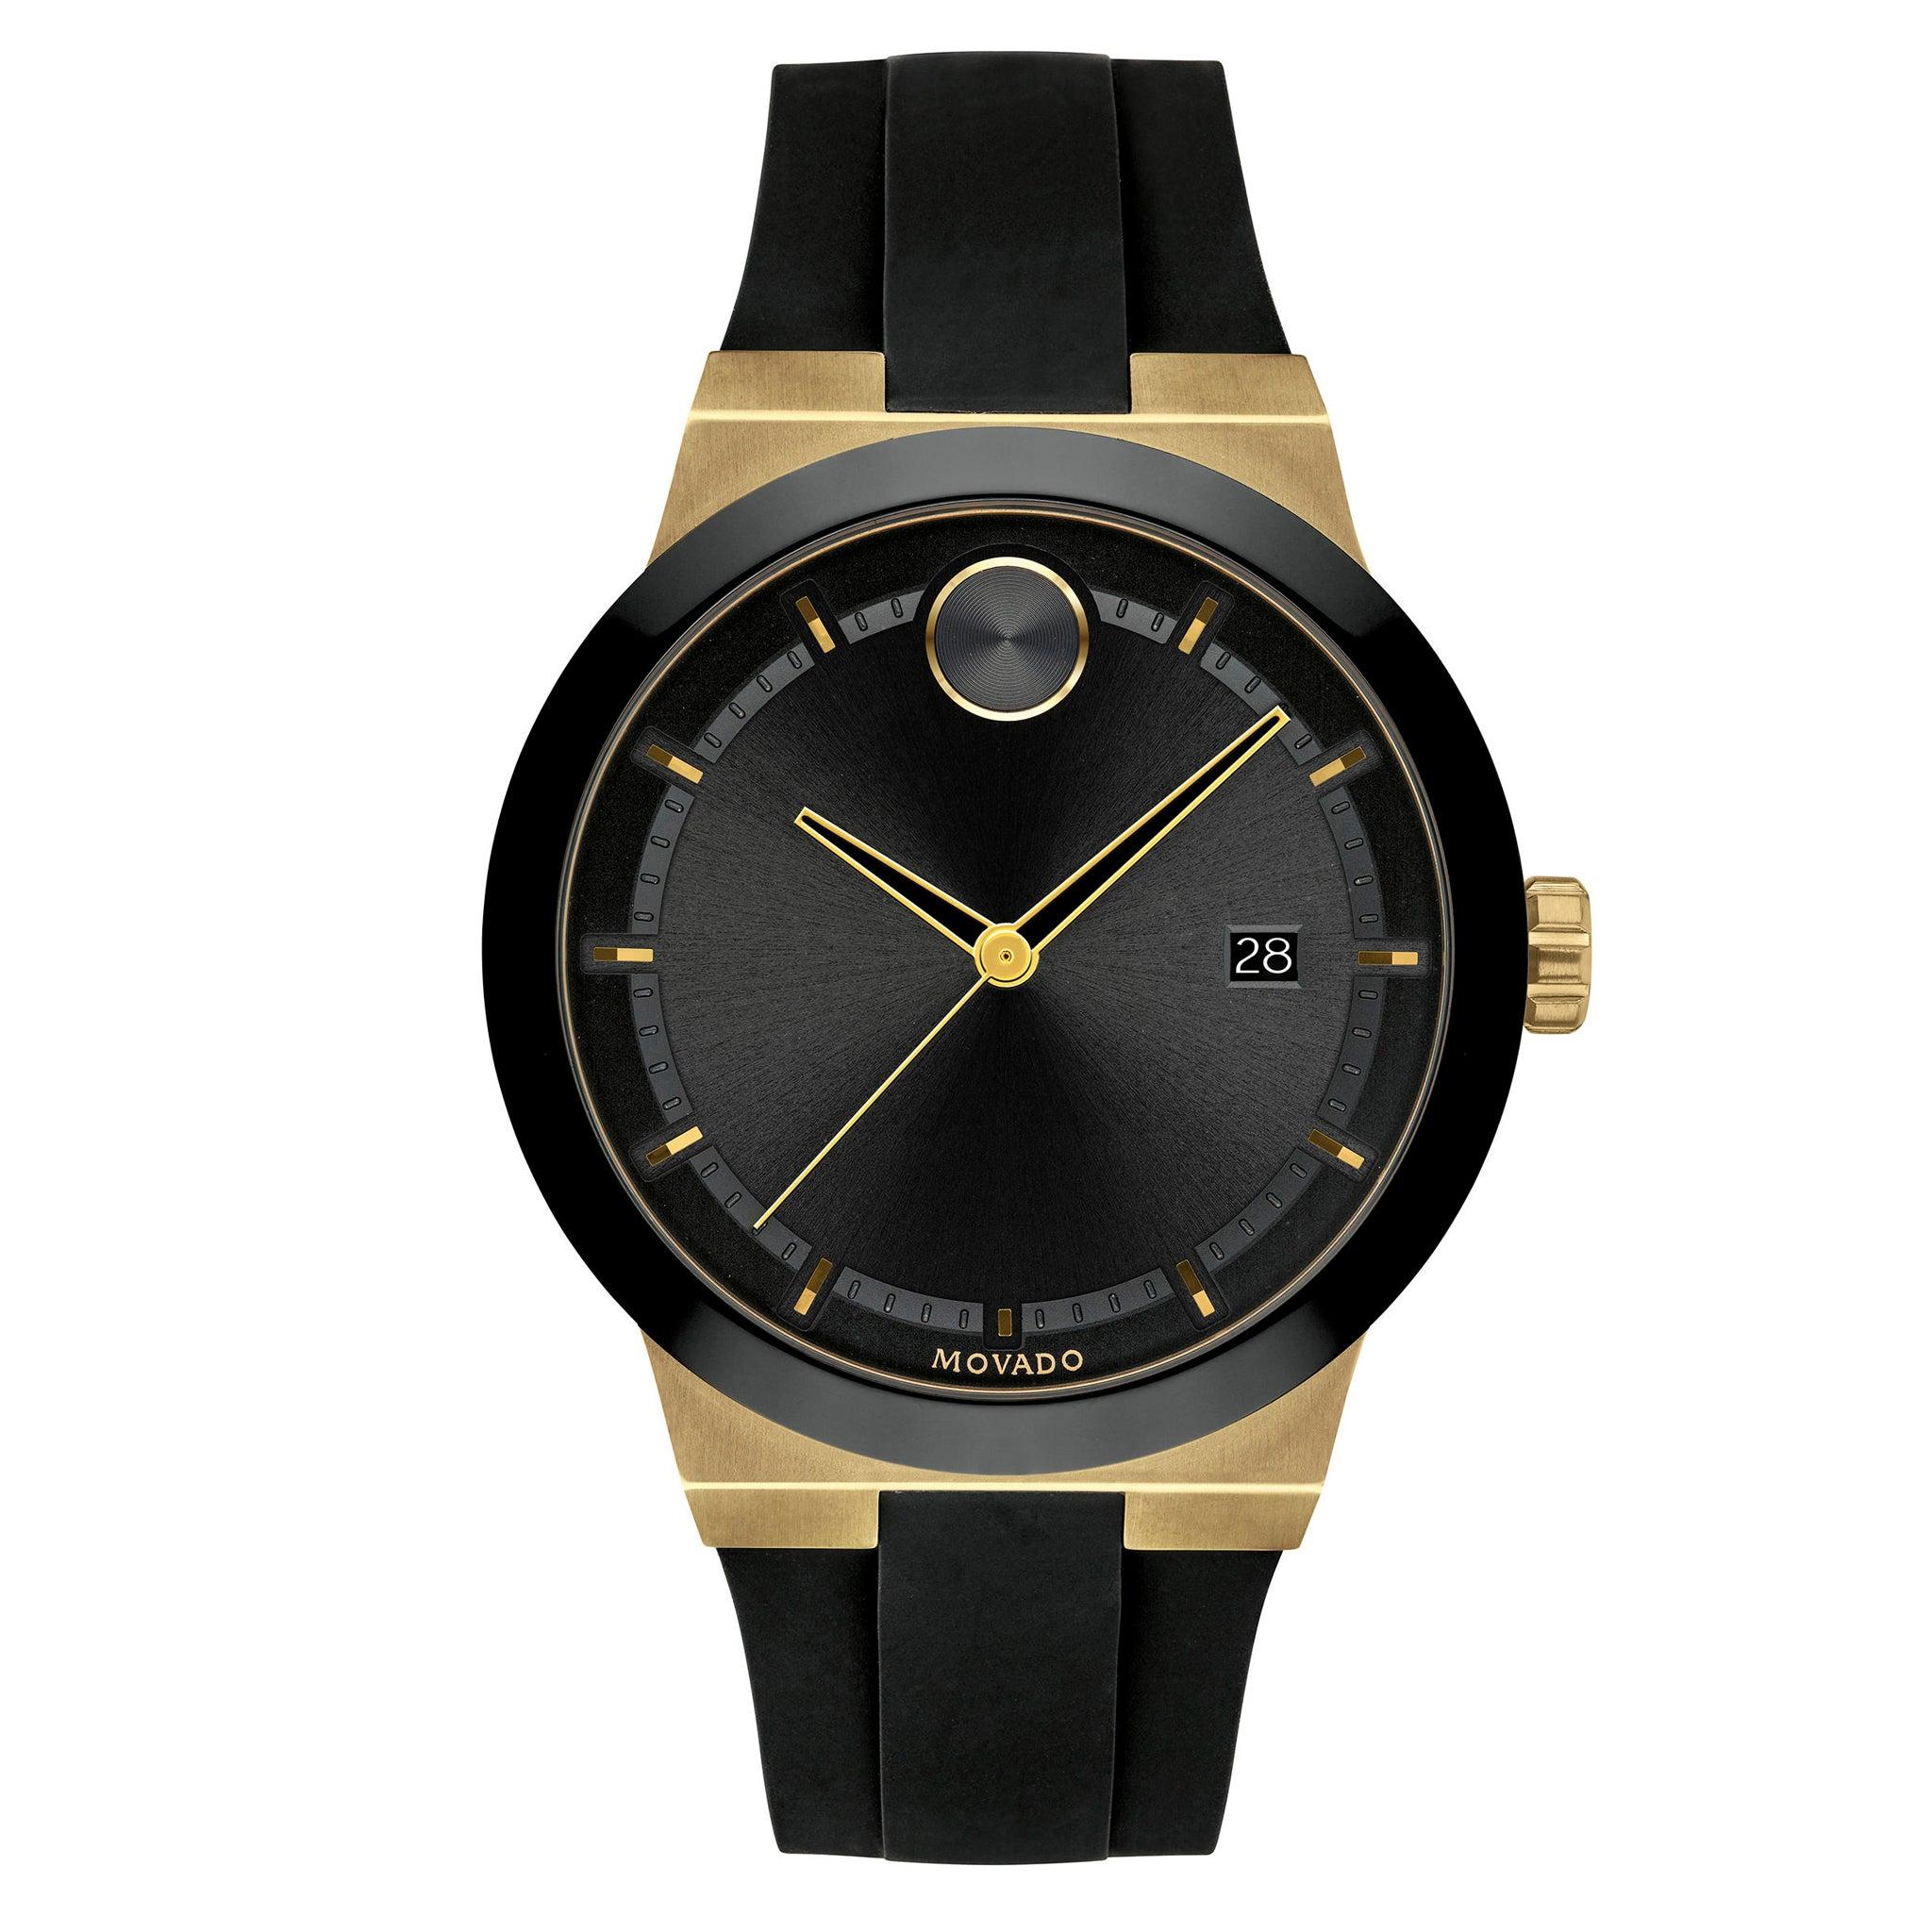 ساعة موفادو بولد فيوجن للرجال ستانلس ستيل بحزام من السيليكون Movado 3600623 Men's Bold Fusion Stainless Steel Swiss Quartz Watch With Silicone Strap